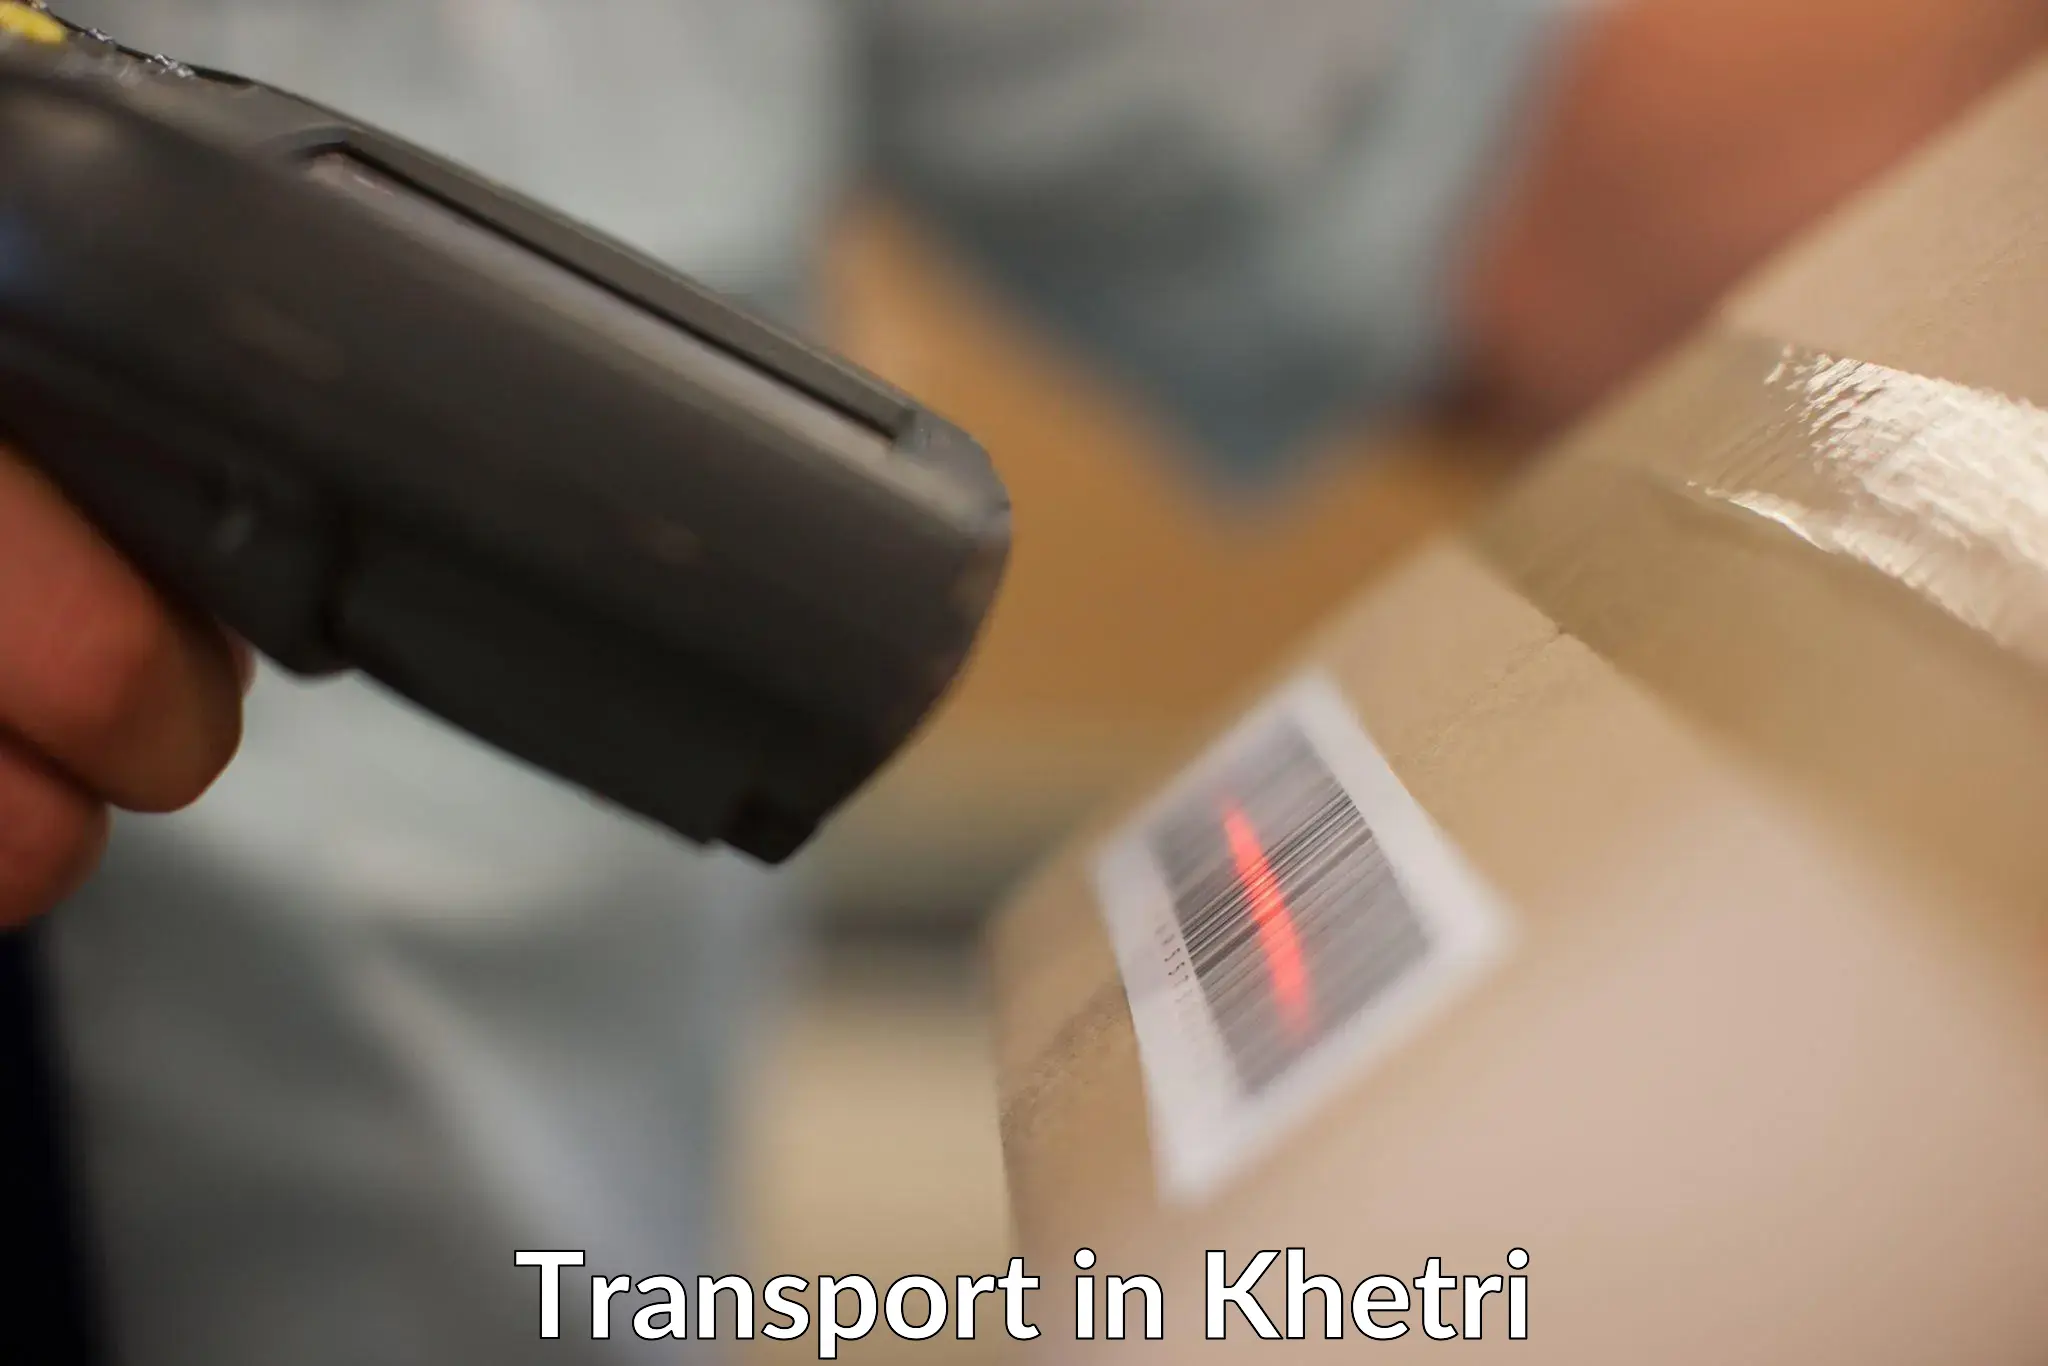 Daily parcel service transport in Khetri